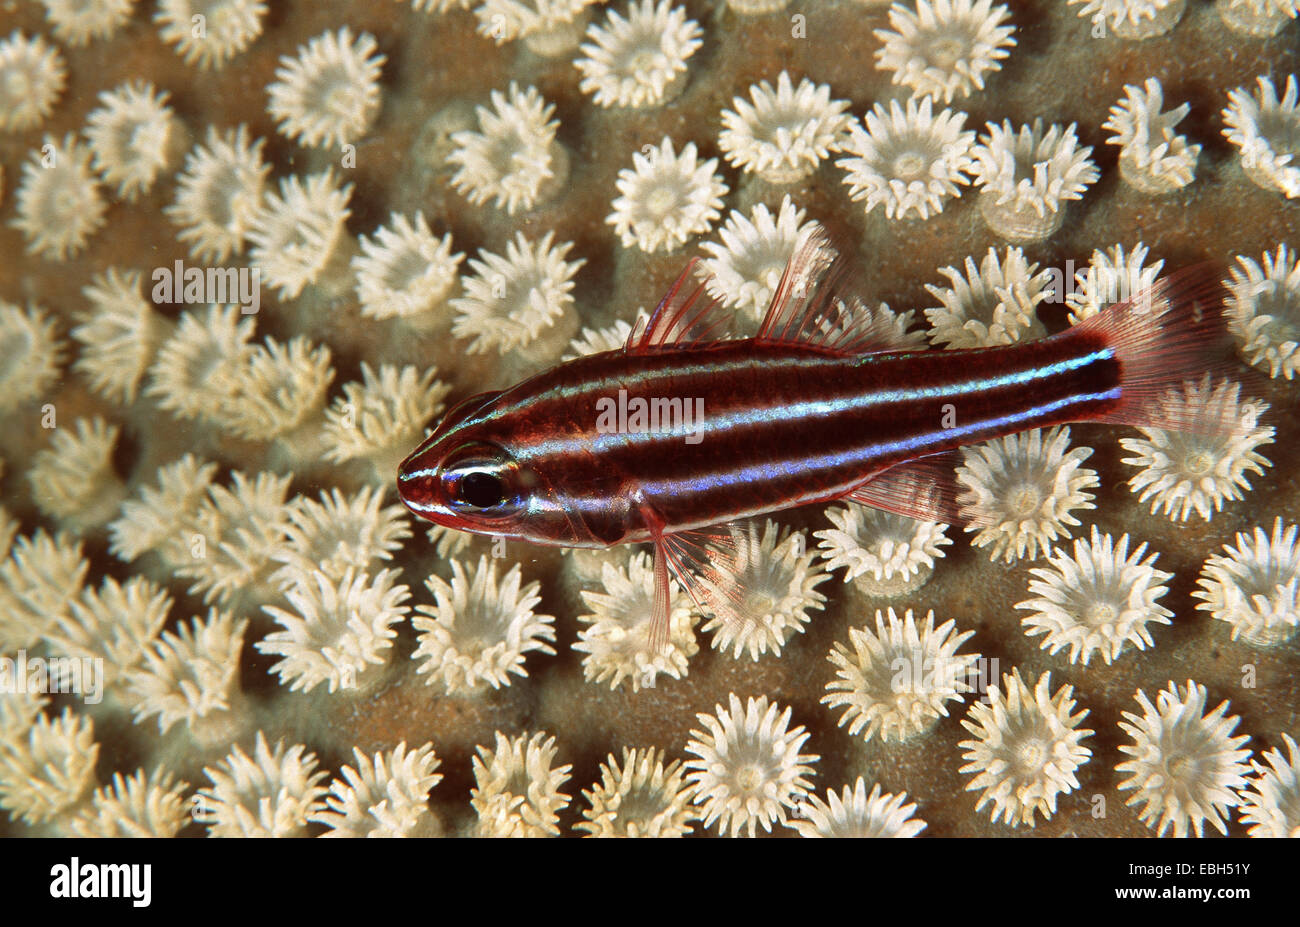 Broadstriped cardinalfish (Apogon nigrofasciatus). Stock Photo